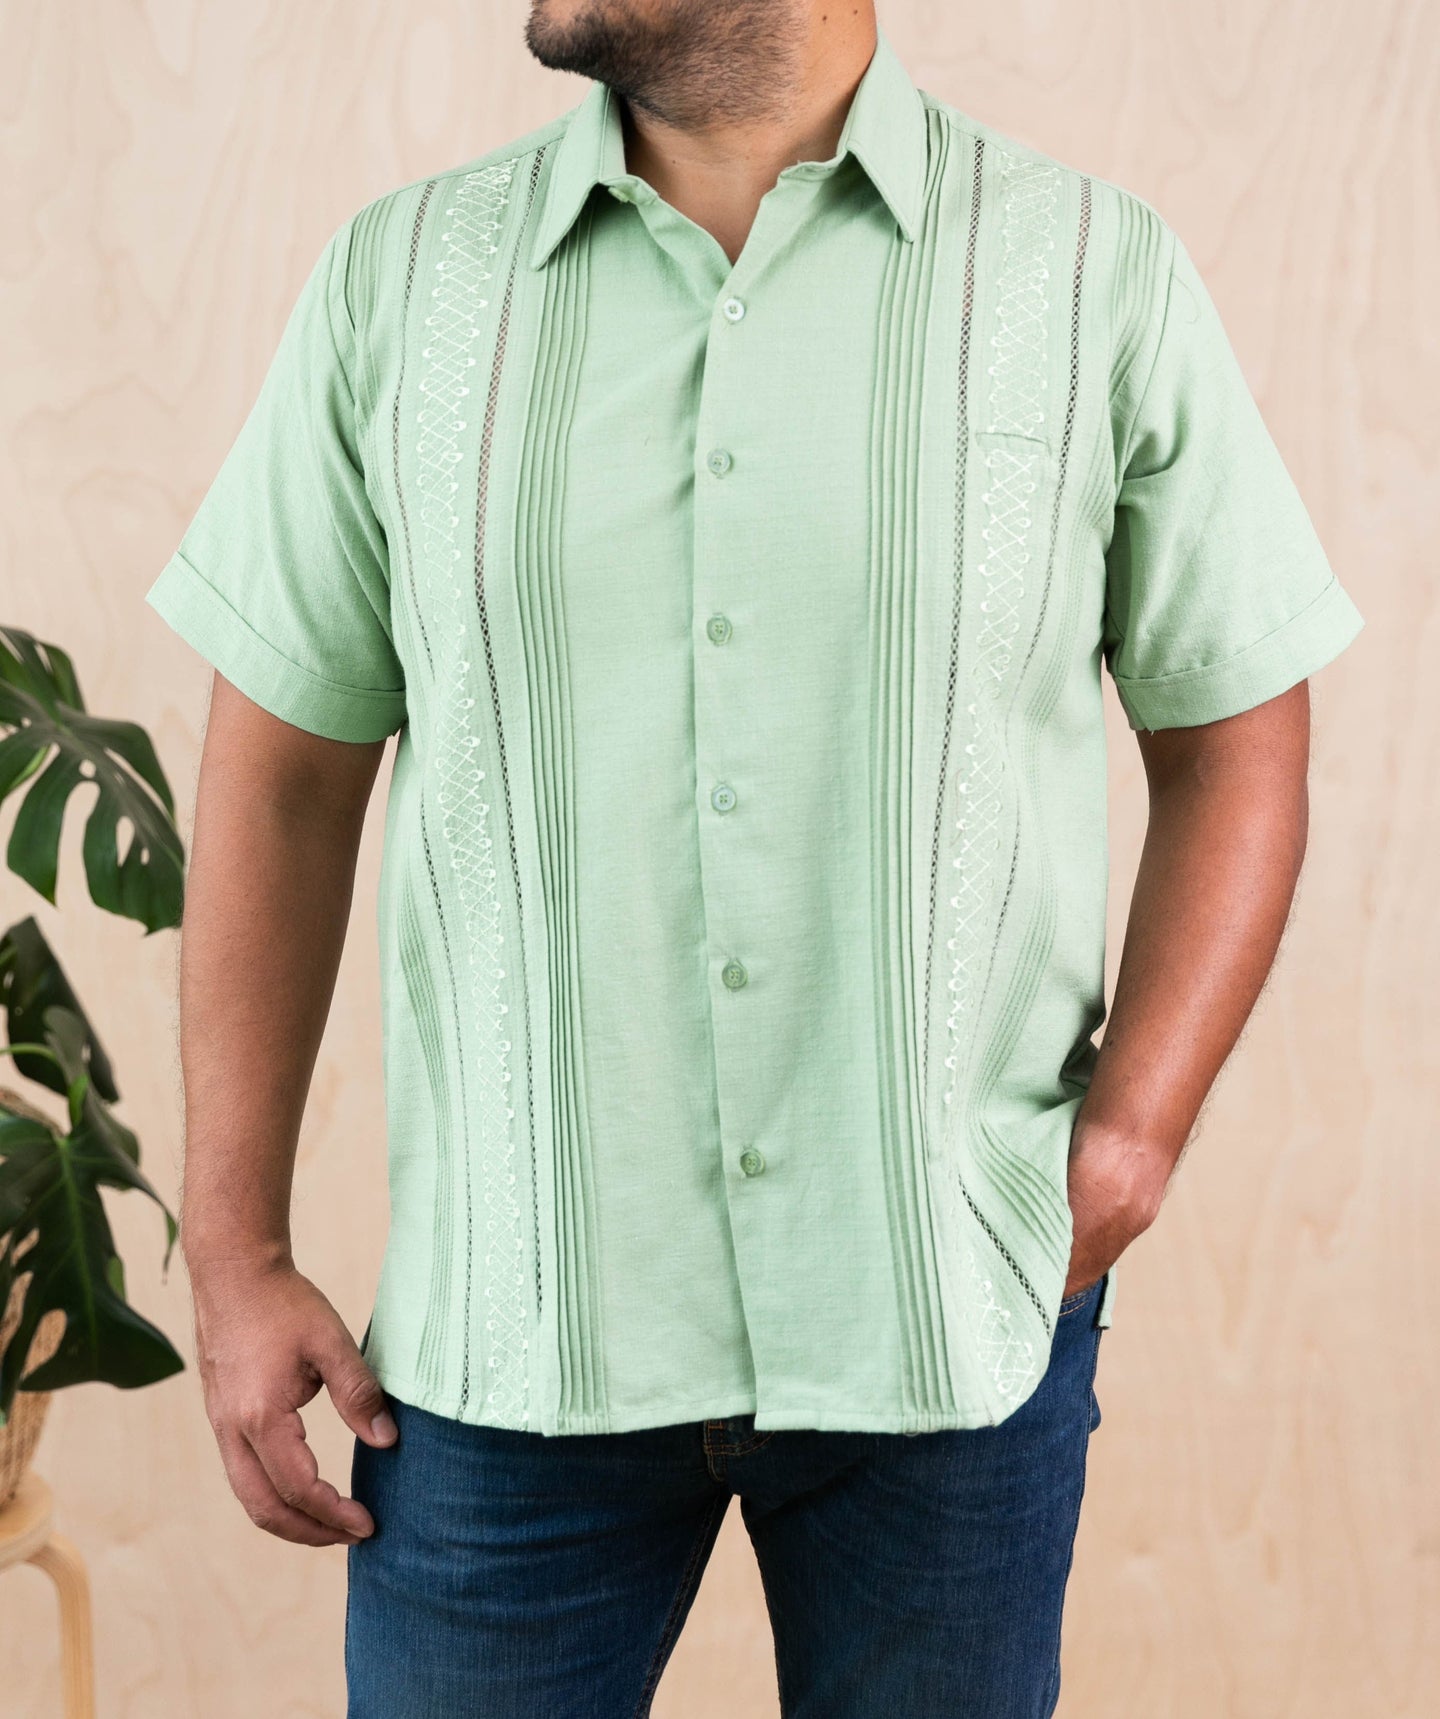 SIDREY Men's Mexican Guayabera Rejilla Shirt - Fern Green